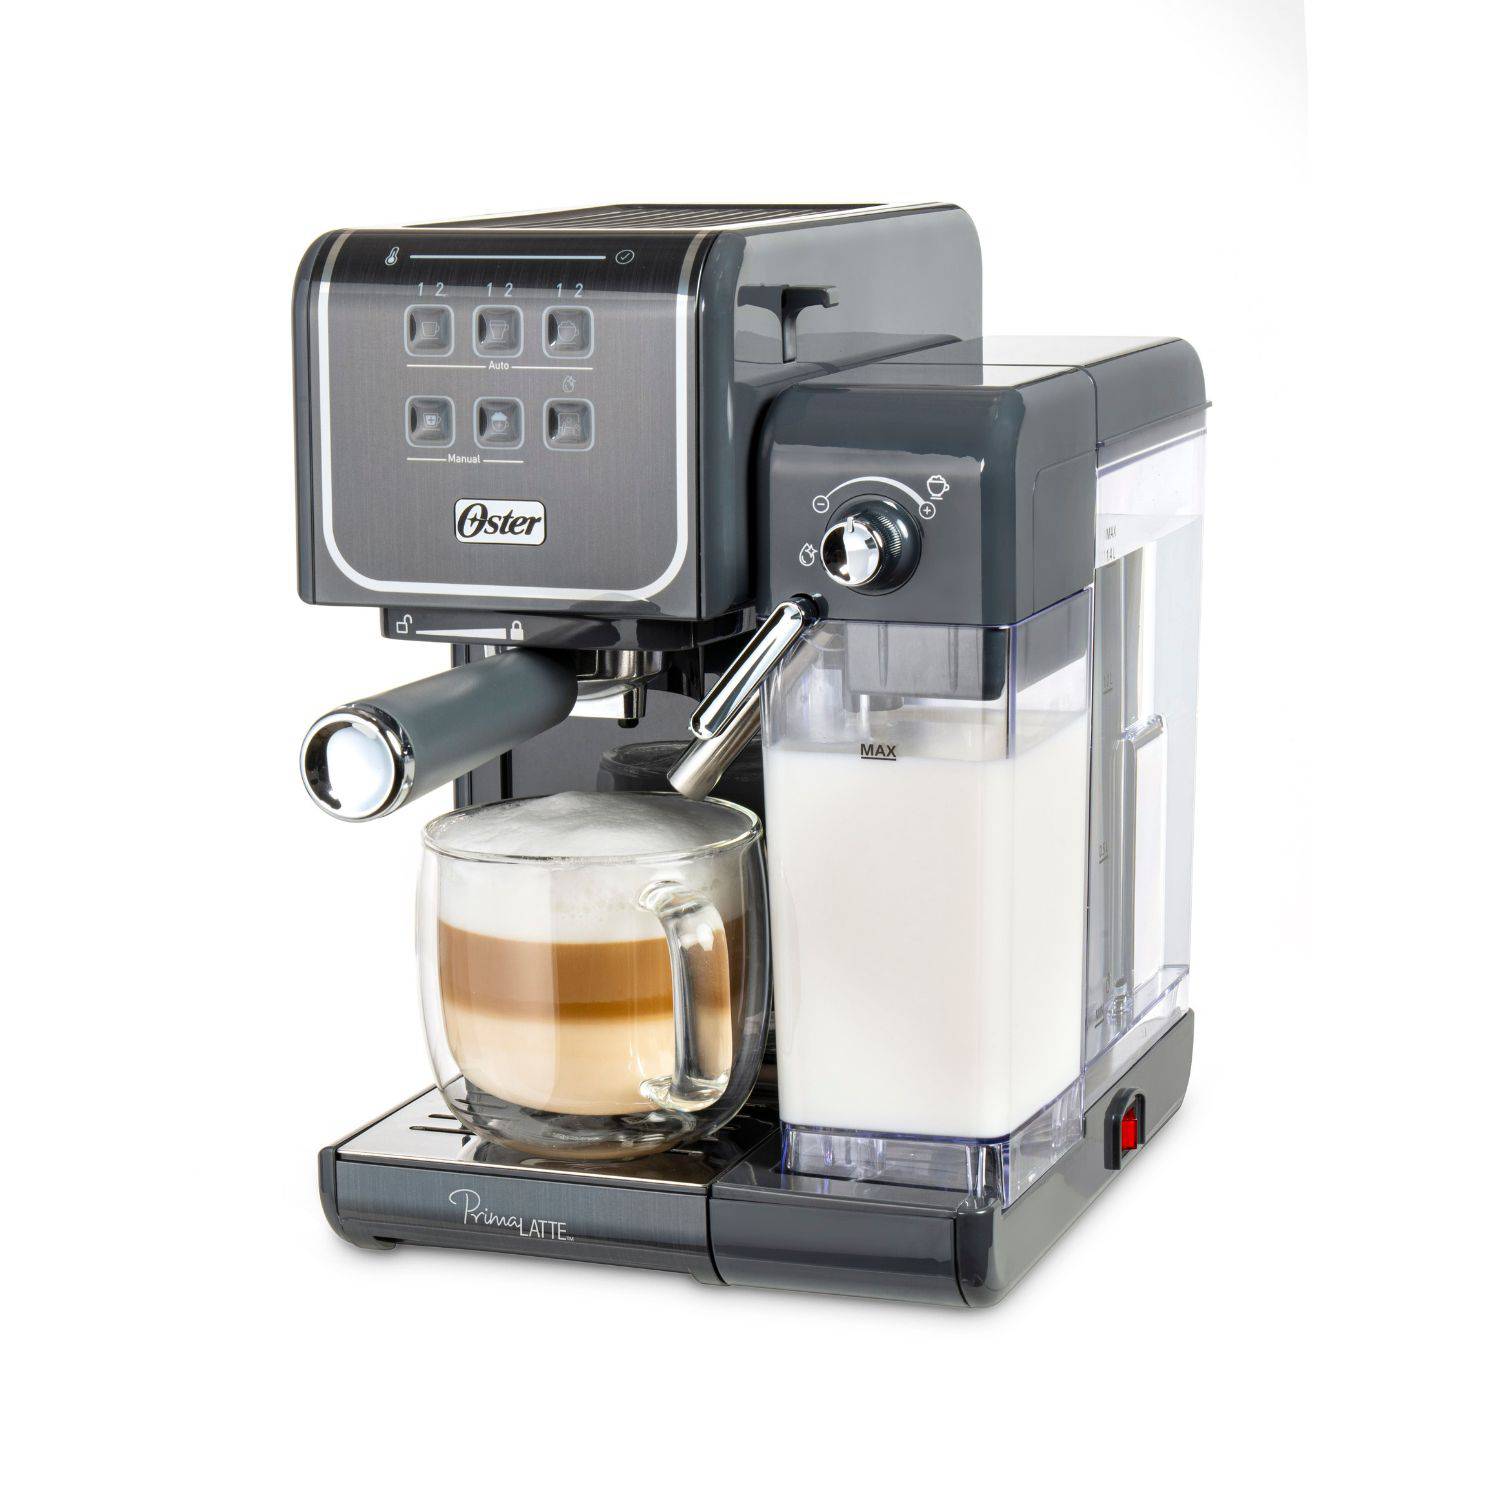 Cafetera Prima Latte Oster Automatica 19 Bares BVSTEM6801M-053